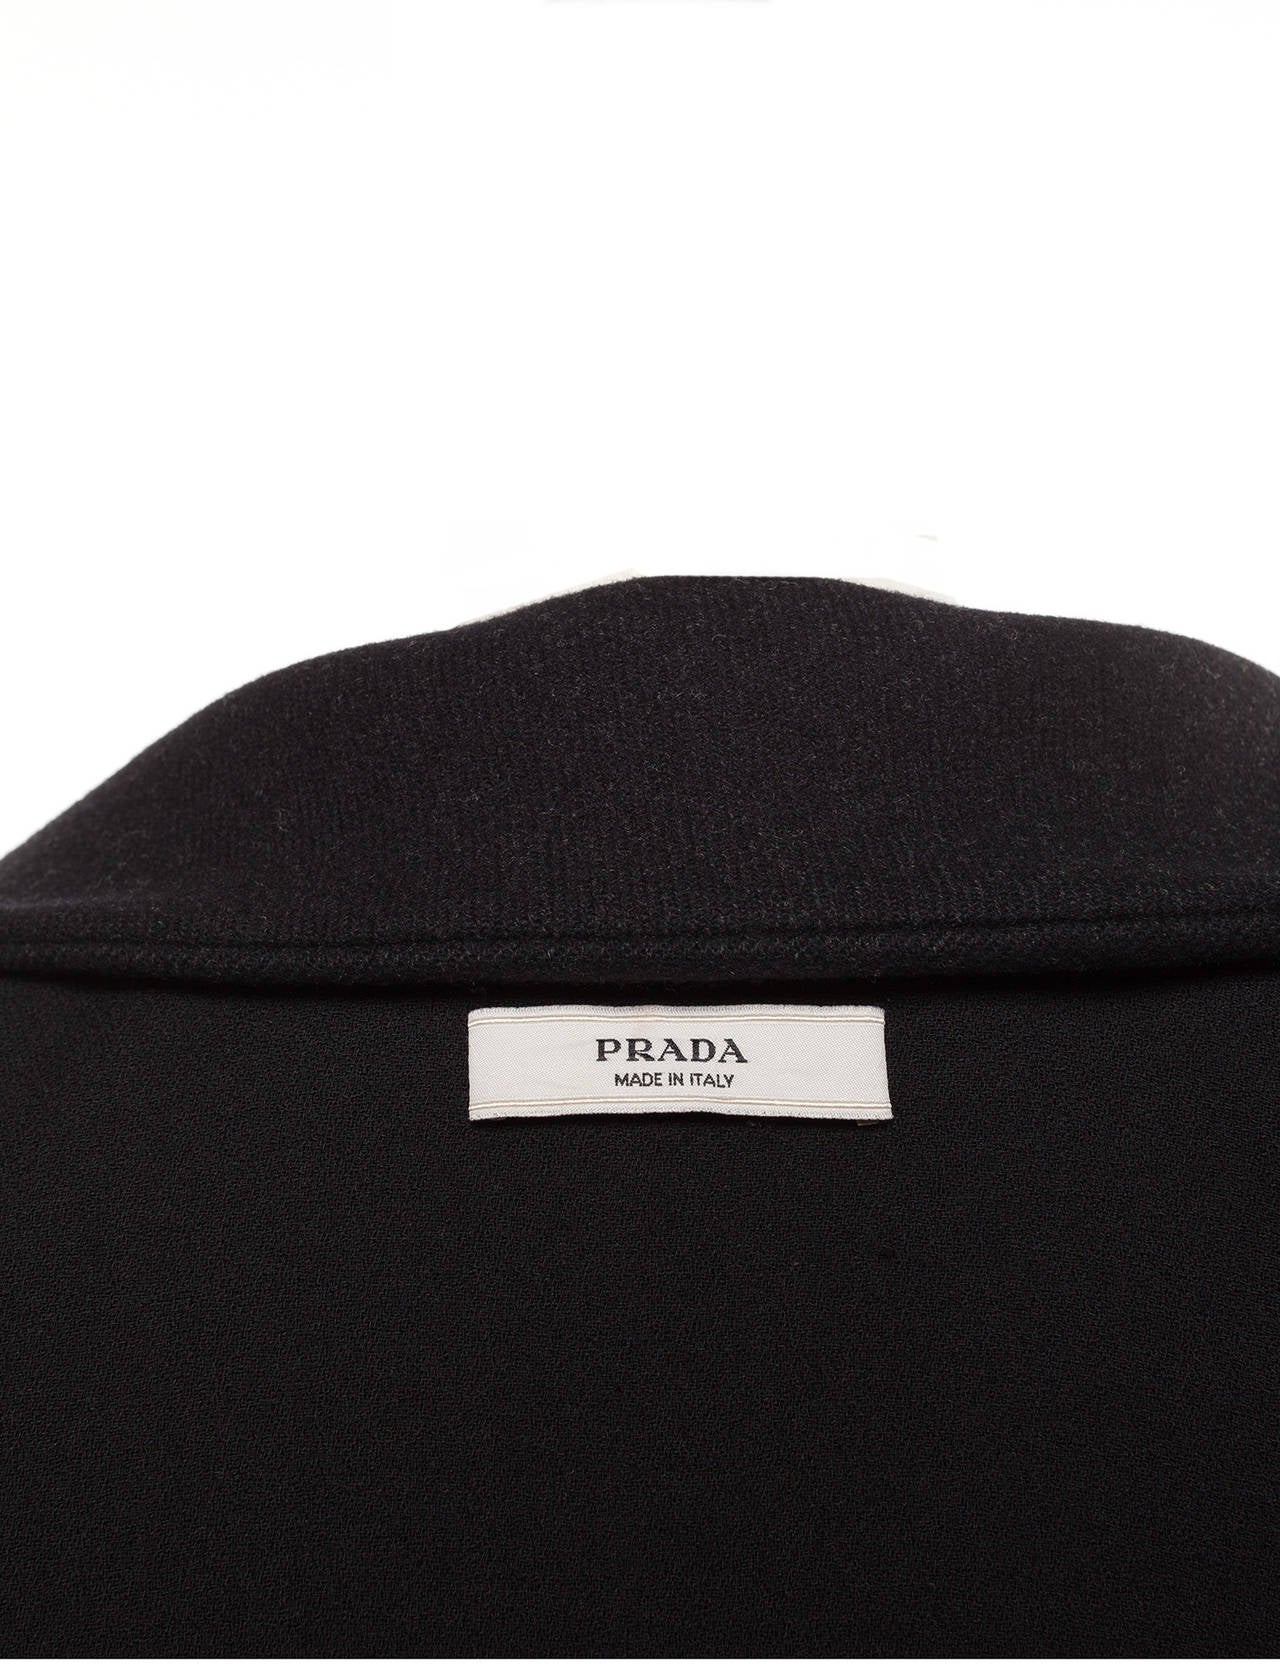 Prada minimal Wool coat with collar detail and large pockets, Sz. M 5